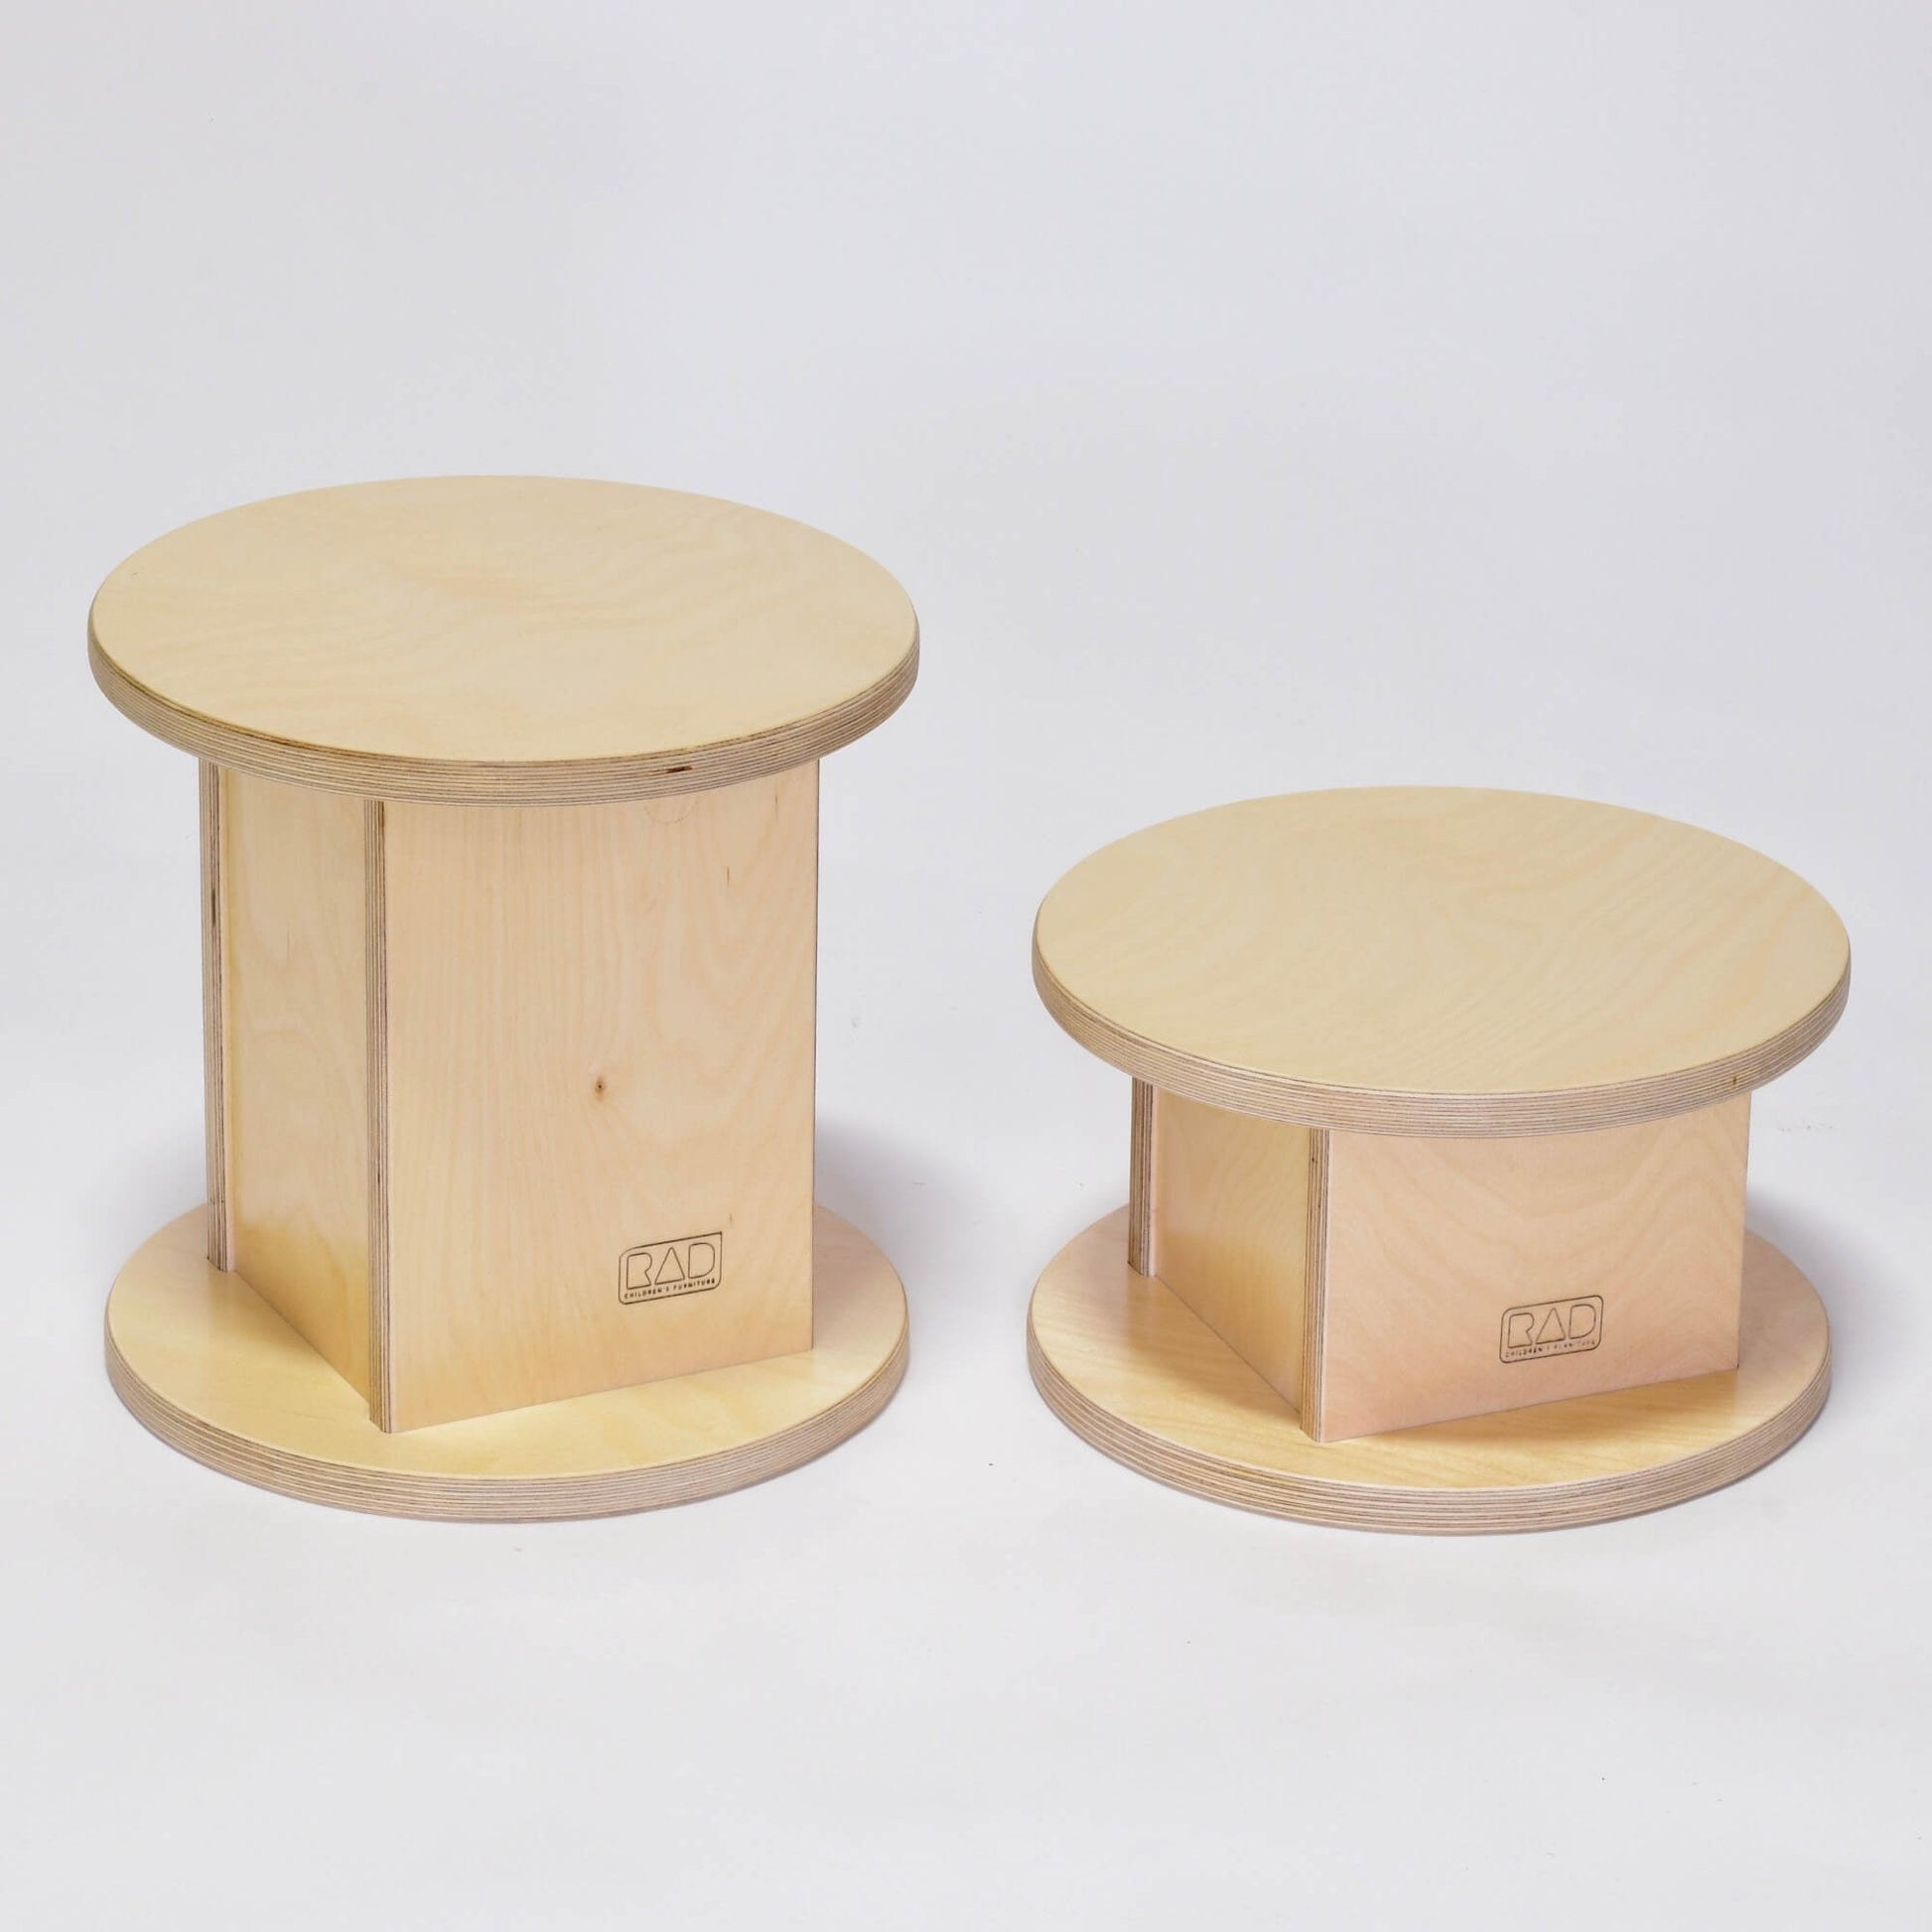 Wooden Stool - Montessori Furniture - montessori toddler furniture - climbing triangle - nursery room